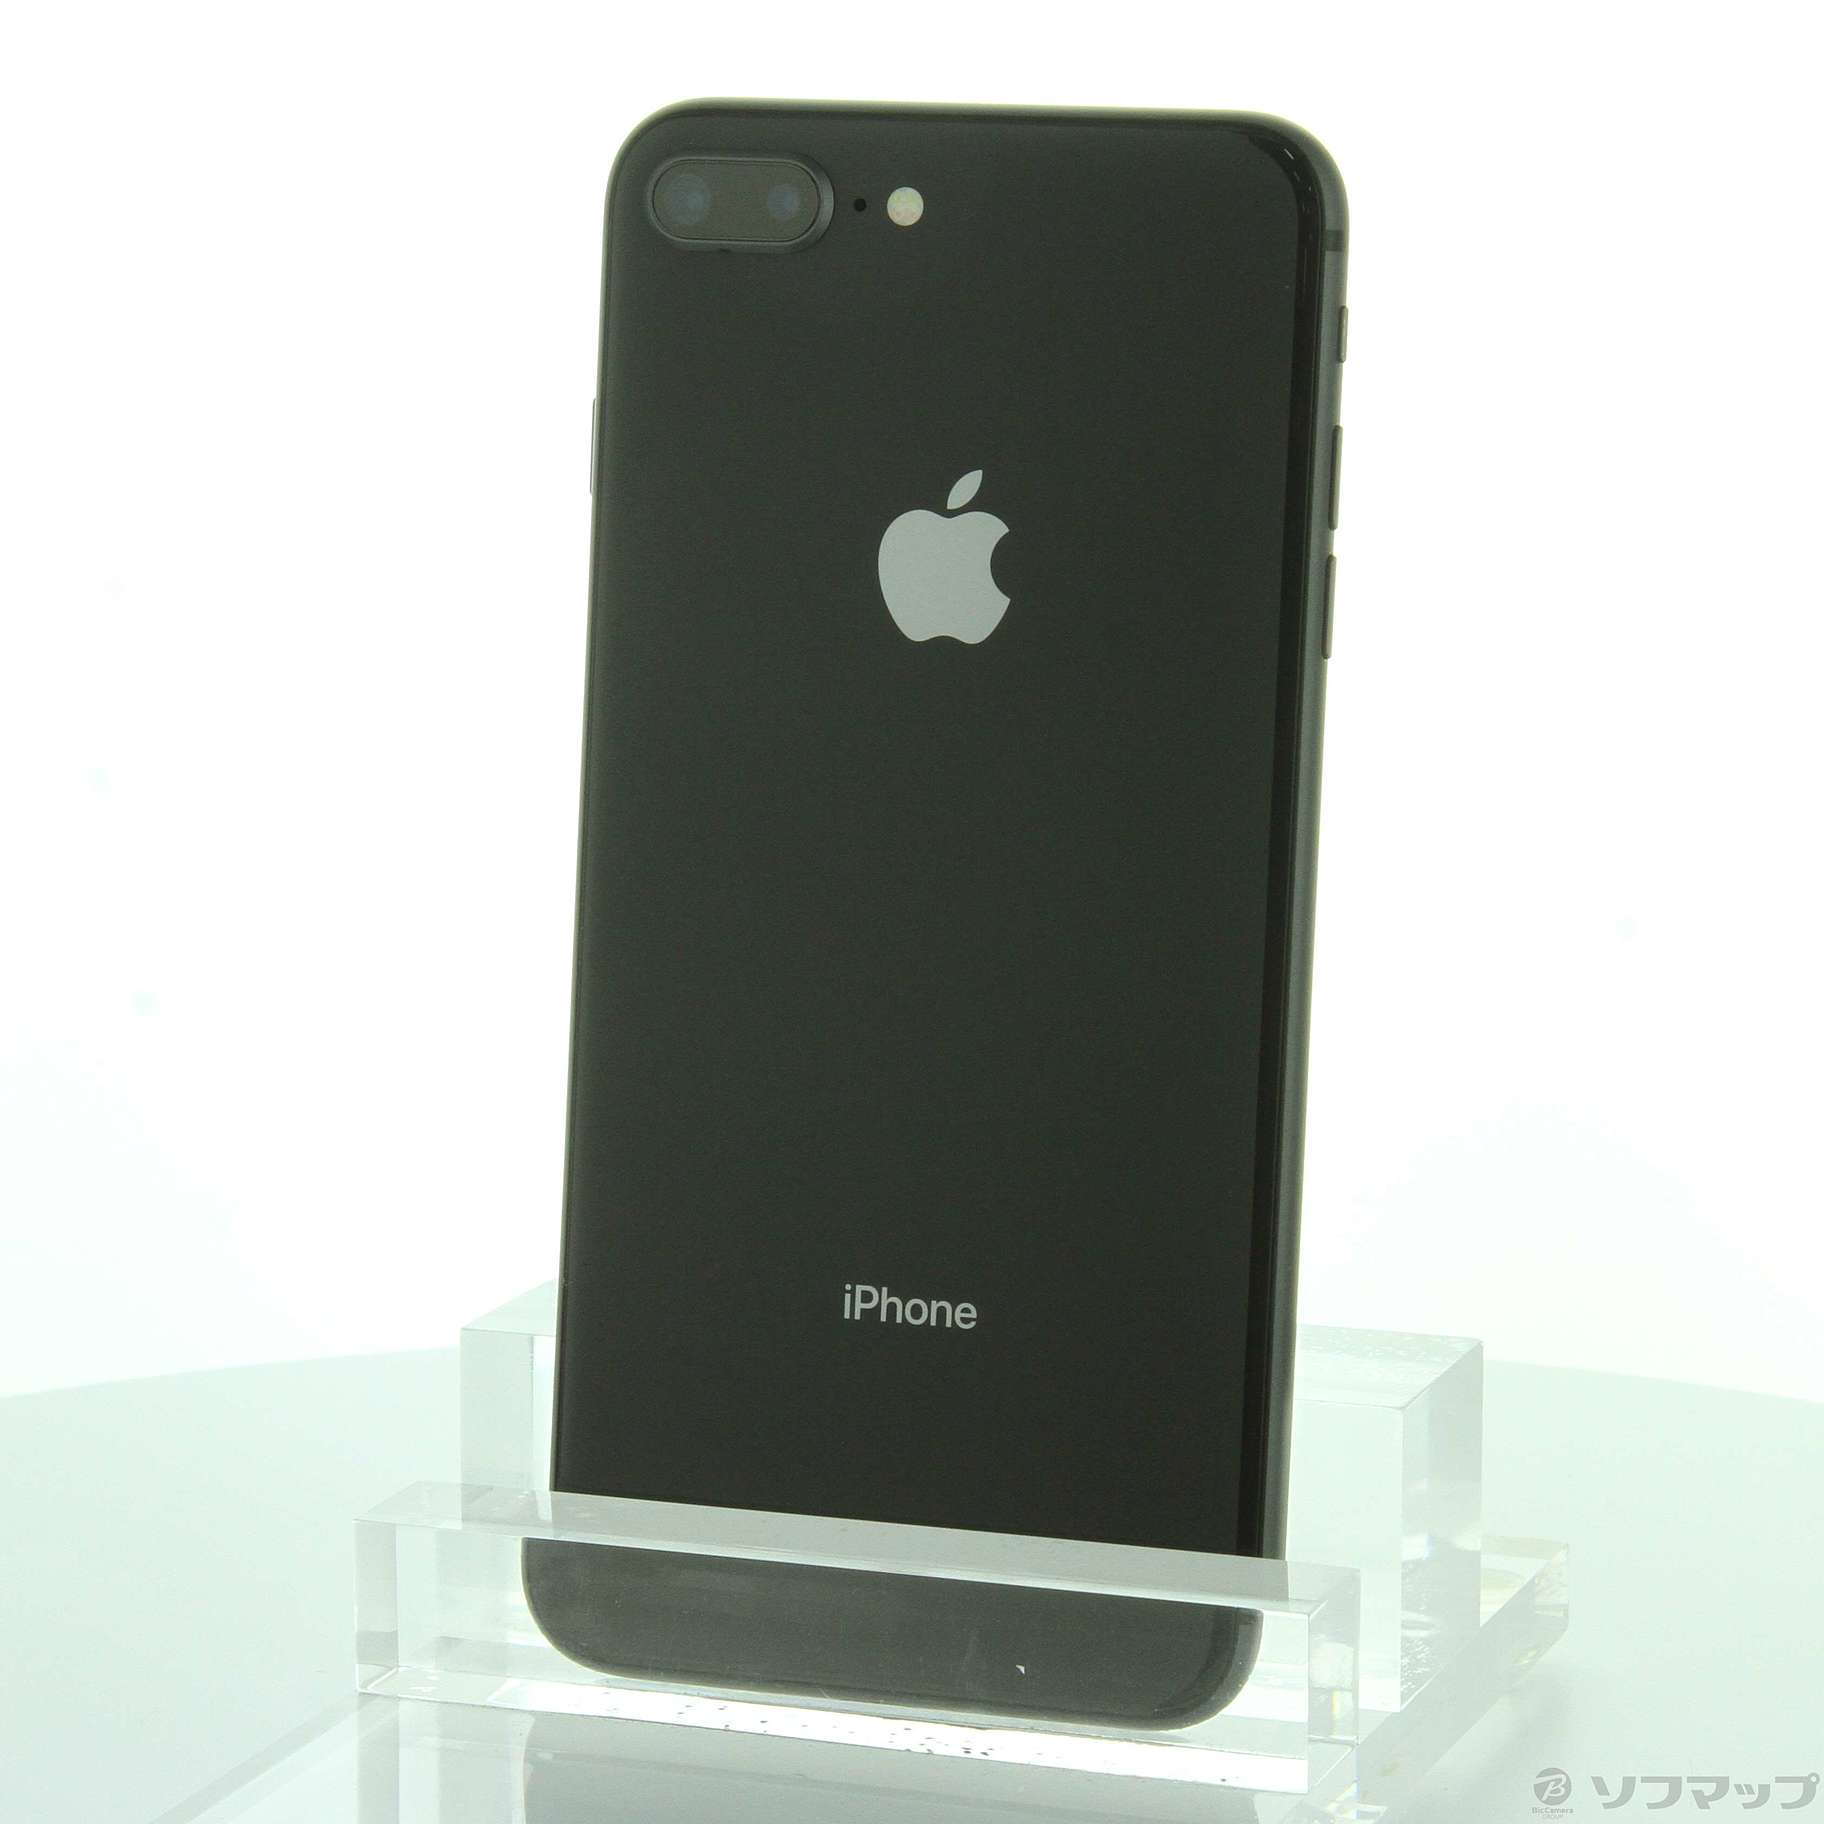 iPhone 8 Plus 64GB Space gray